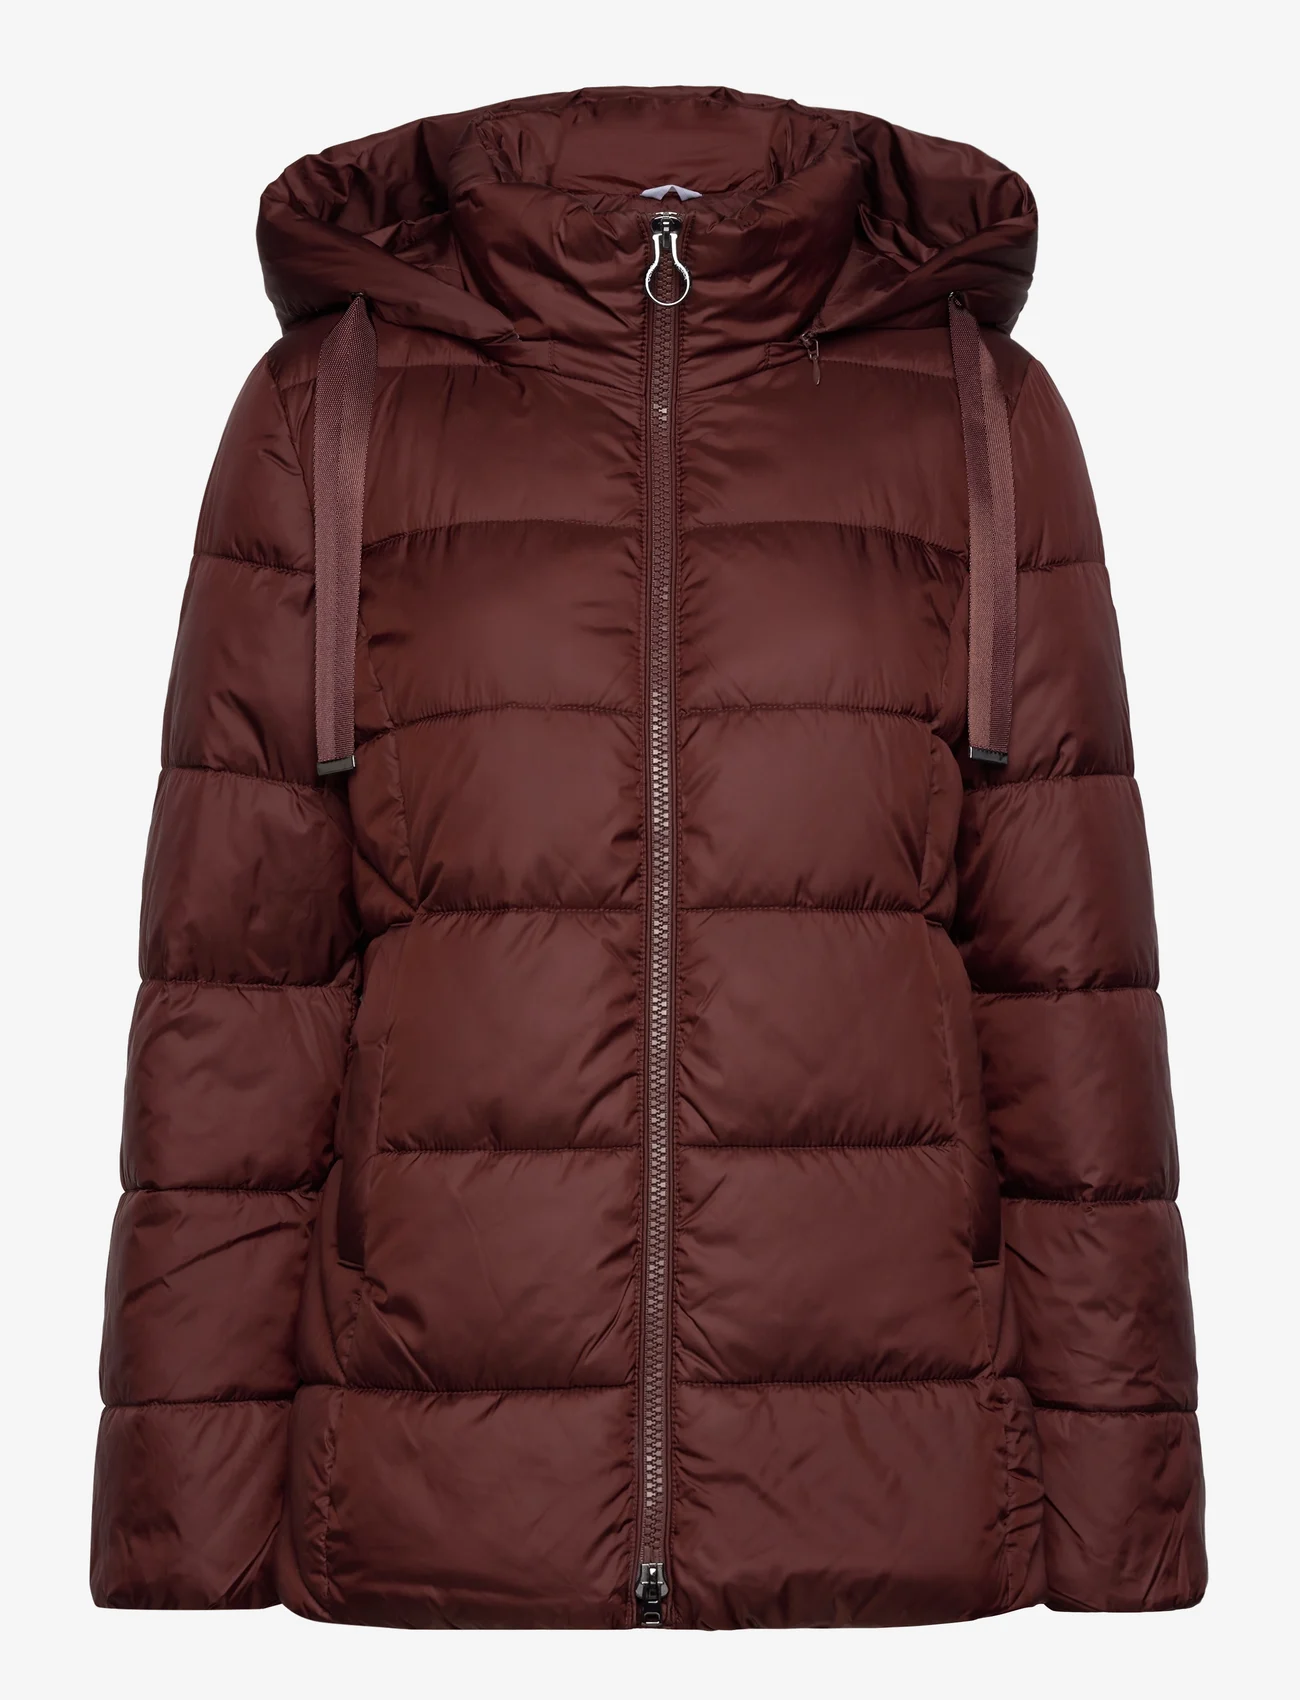 Gerry Weber Edition - Coat not wool - winter jackets - chestnut - 0